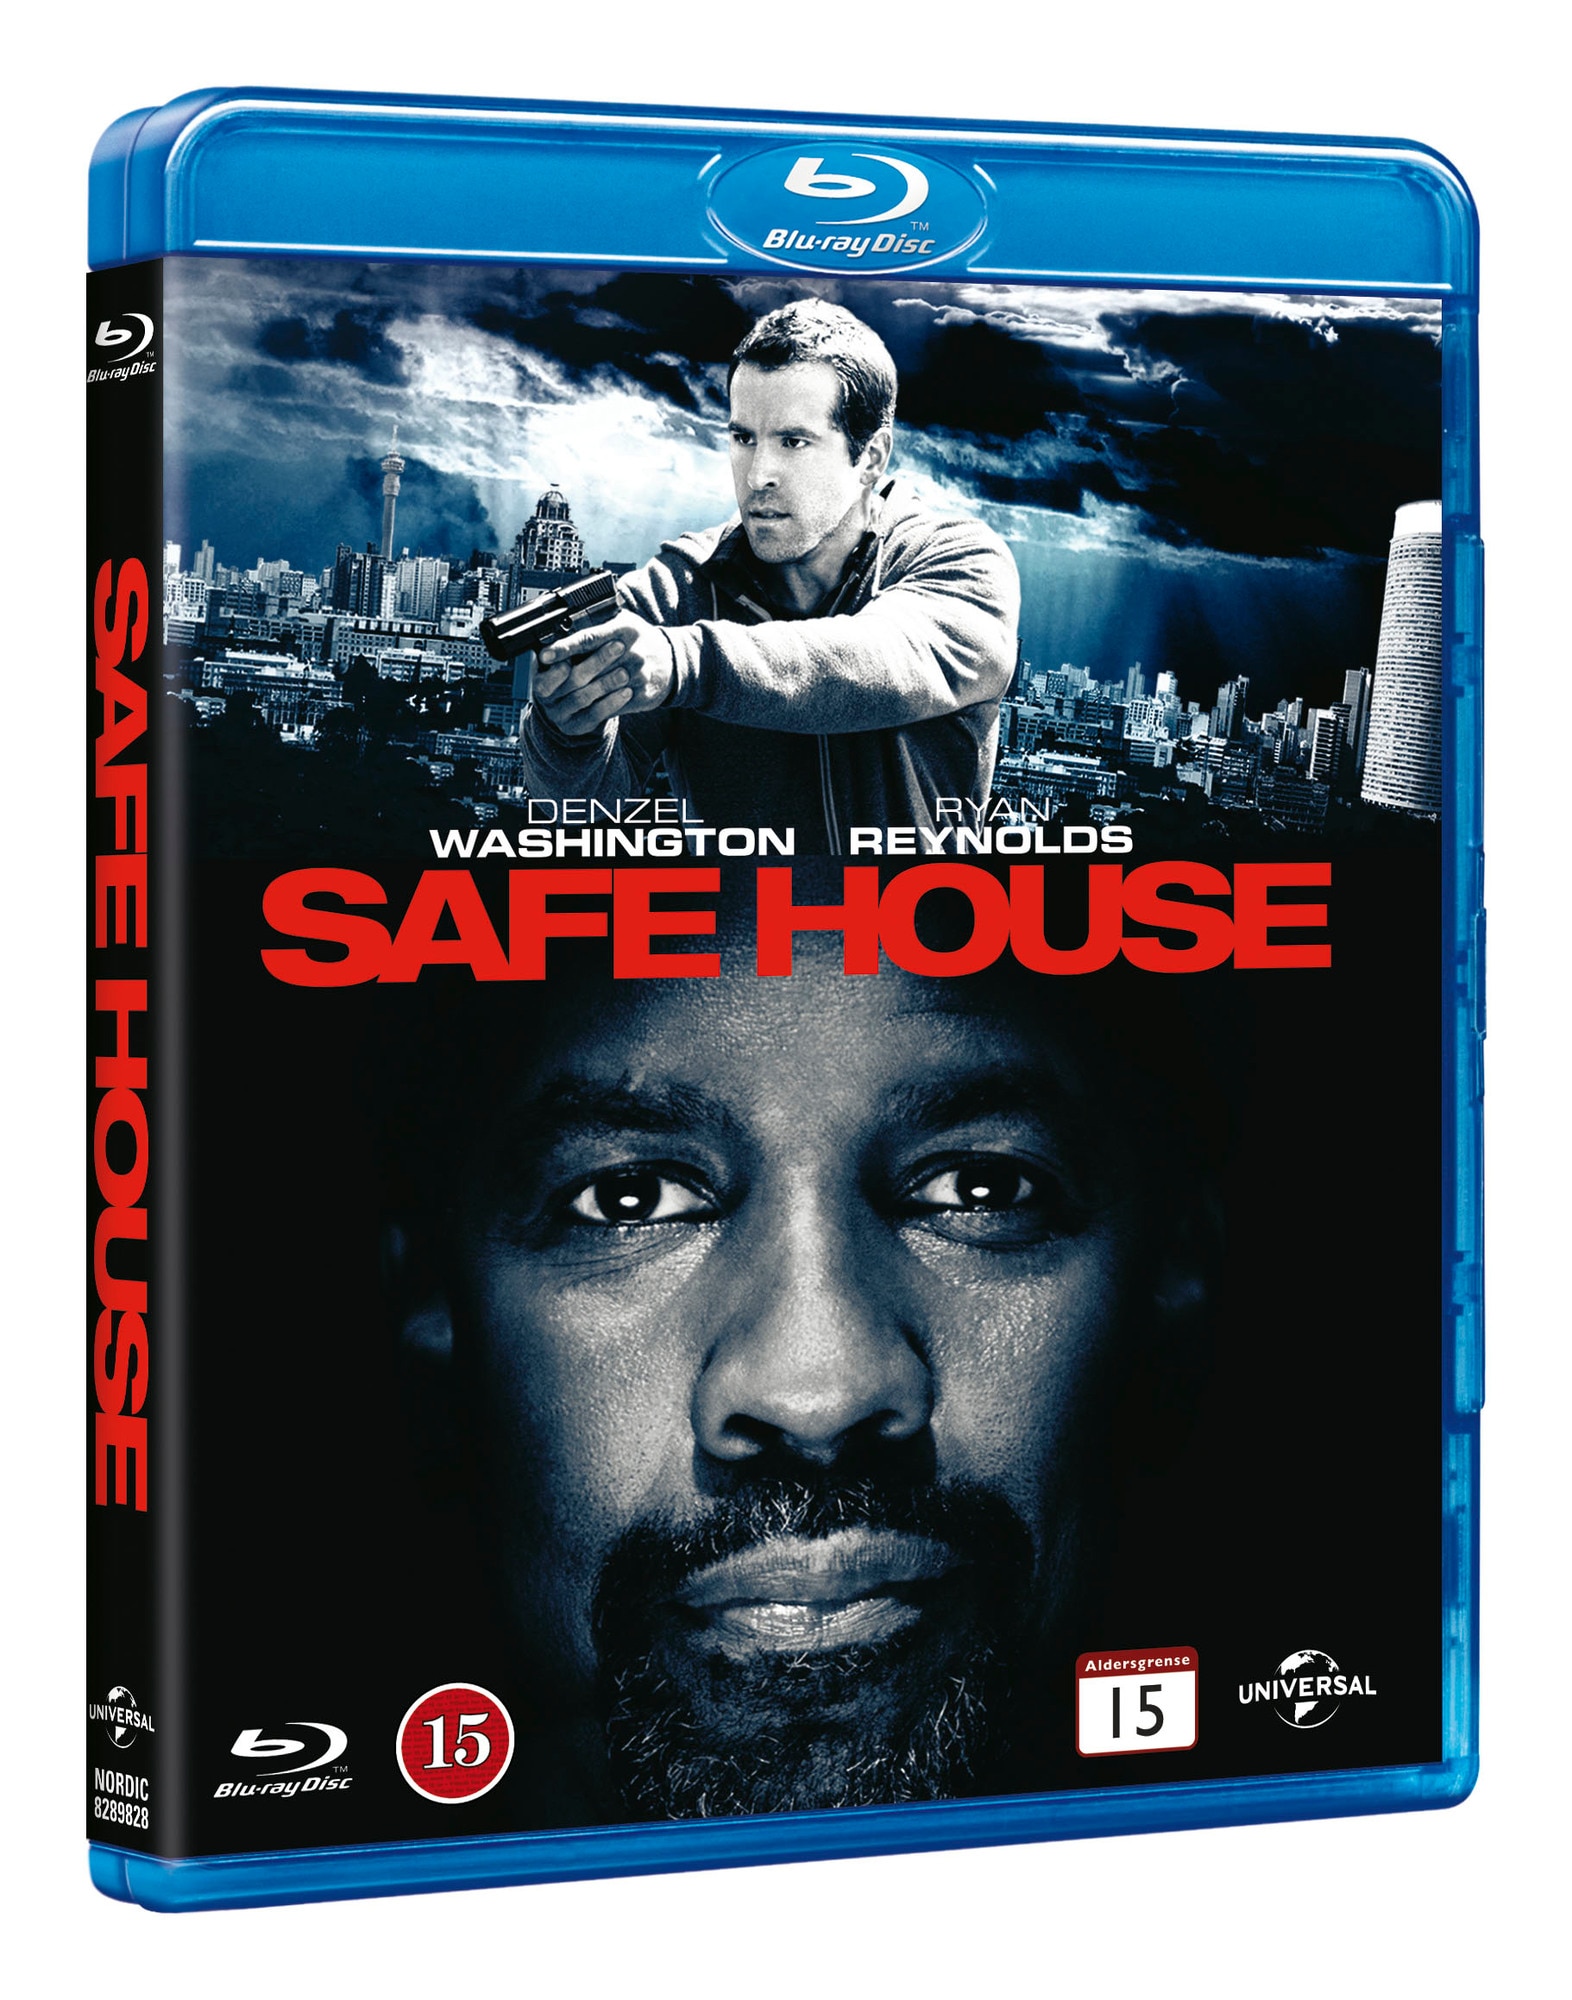 Safe house (blu-ray) - Elkjøp